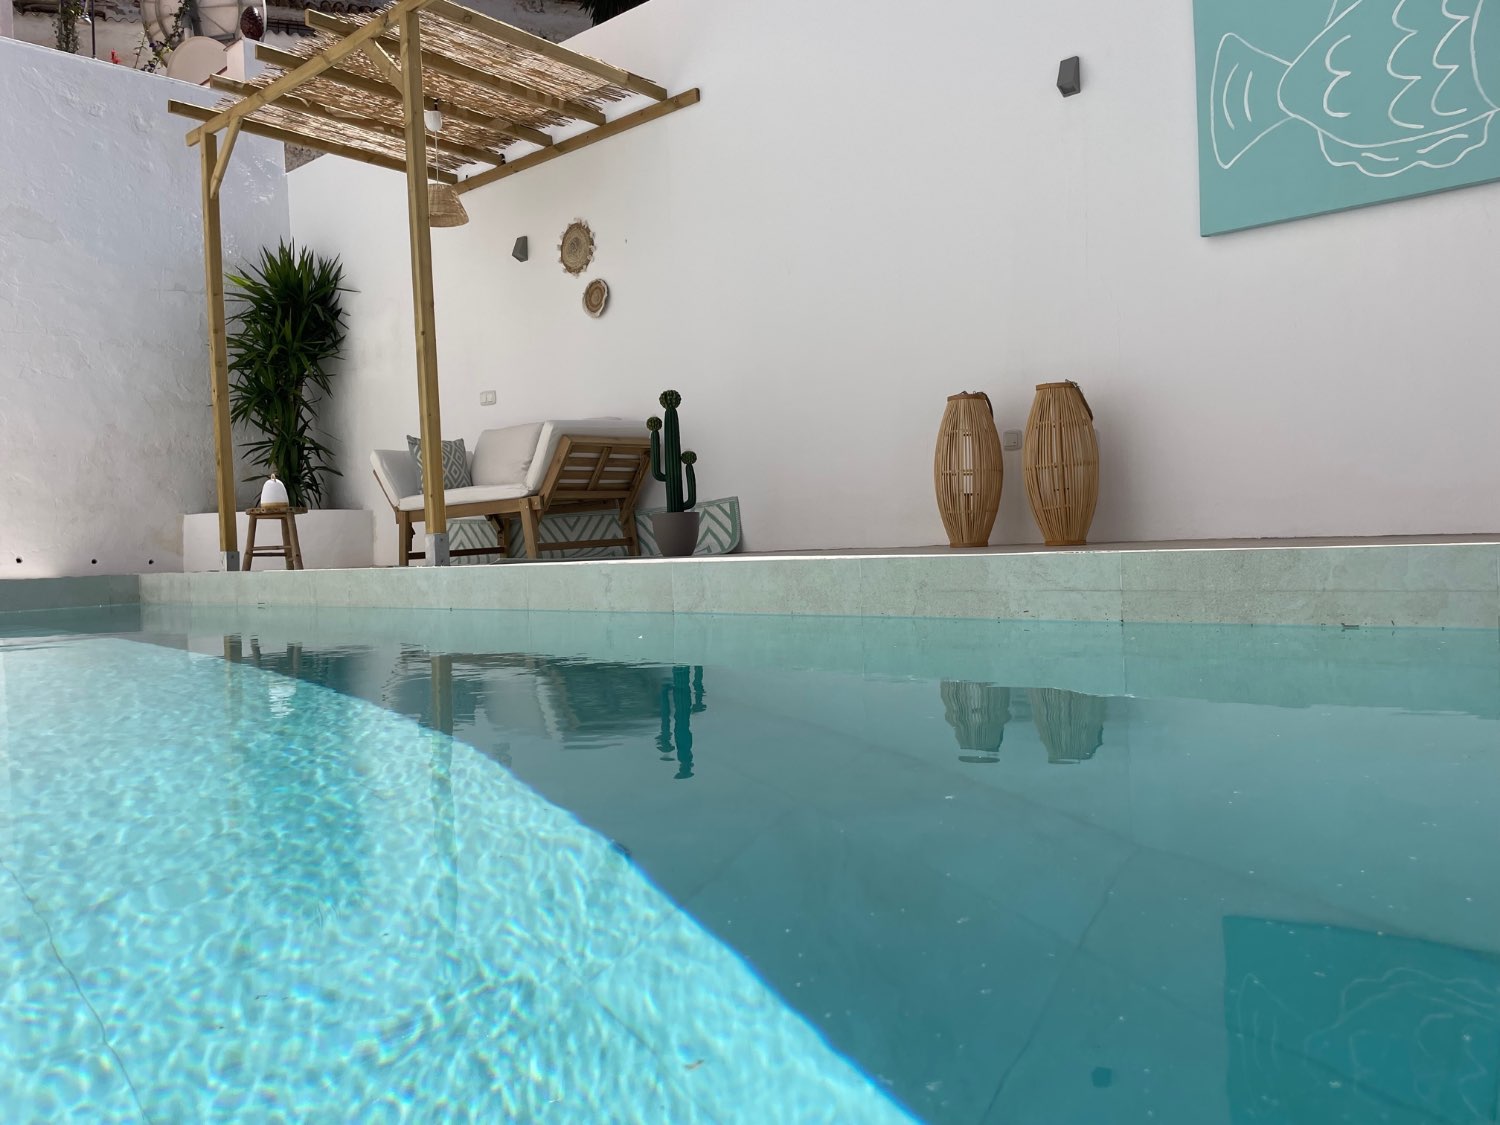 Komplett renovierte Wohnung mit privatem Pool in Frigiliana.